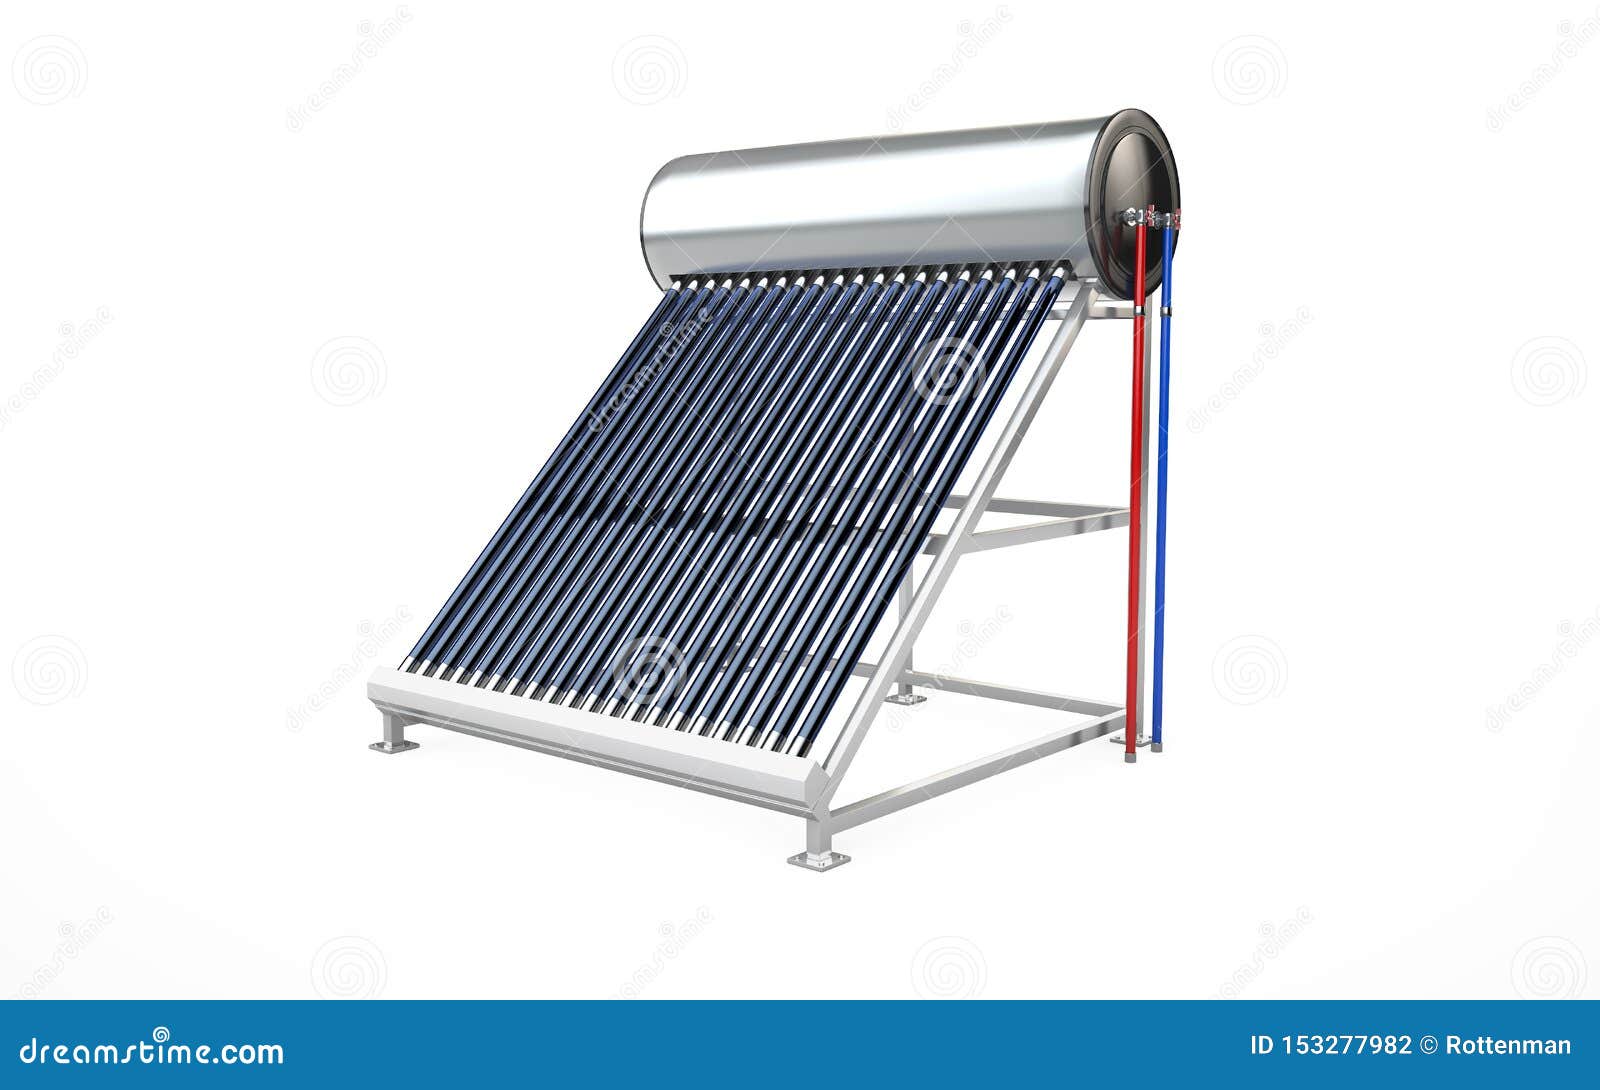 solar-water-heater-alternative-energy-stock-illustration